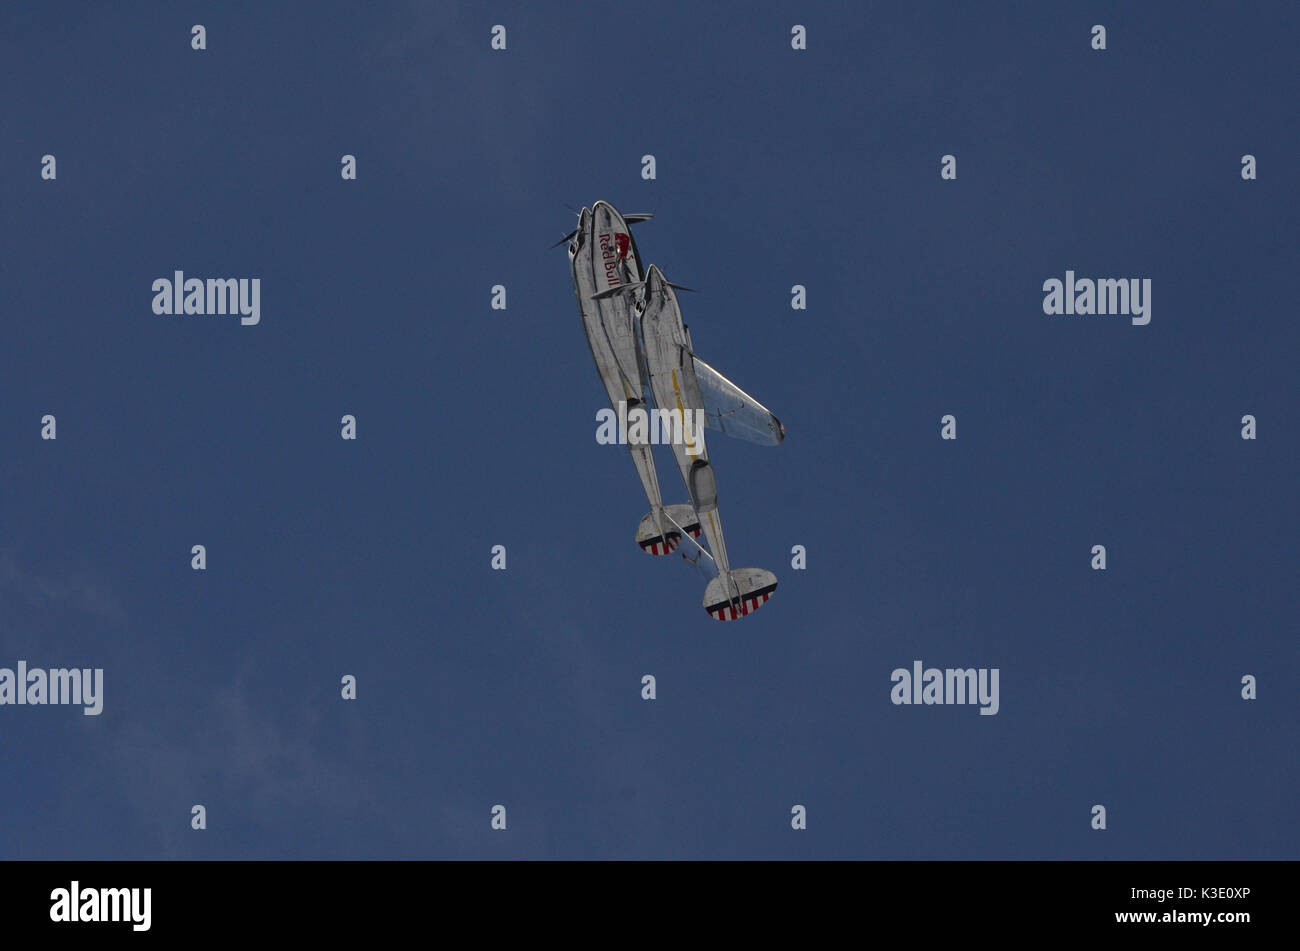 Germany, Bavaria, air display, aerobatics, fighter bomber, Stock Photo